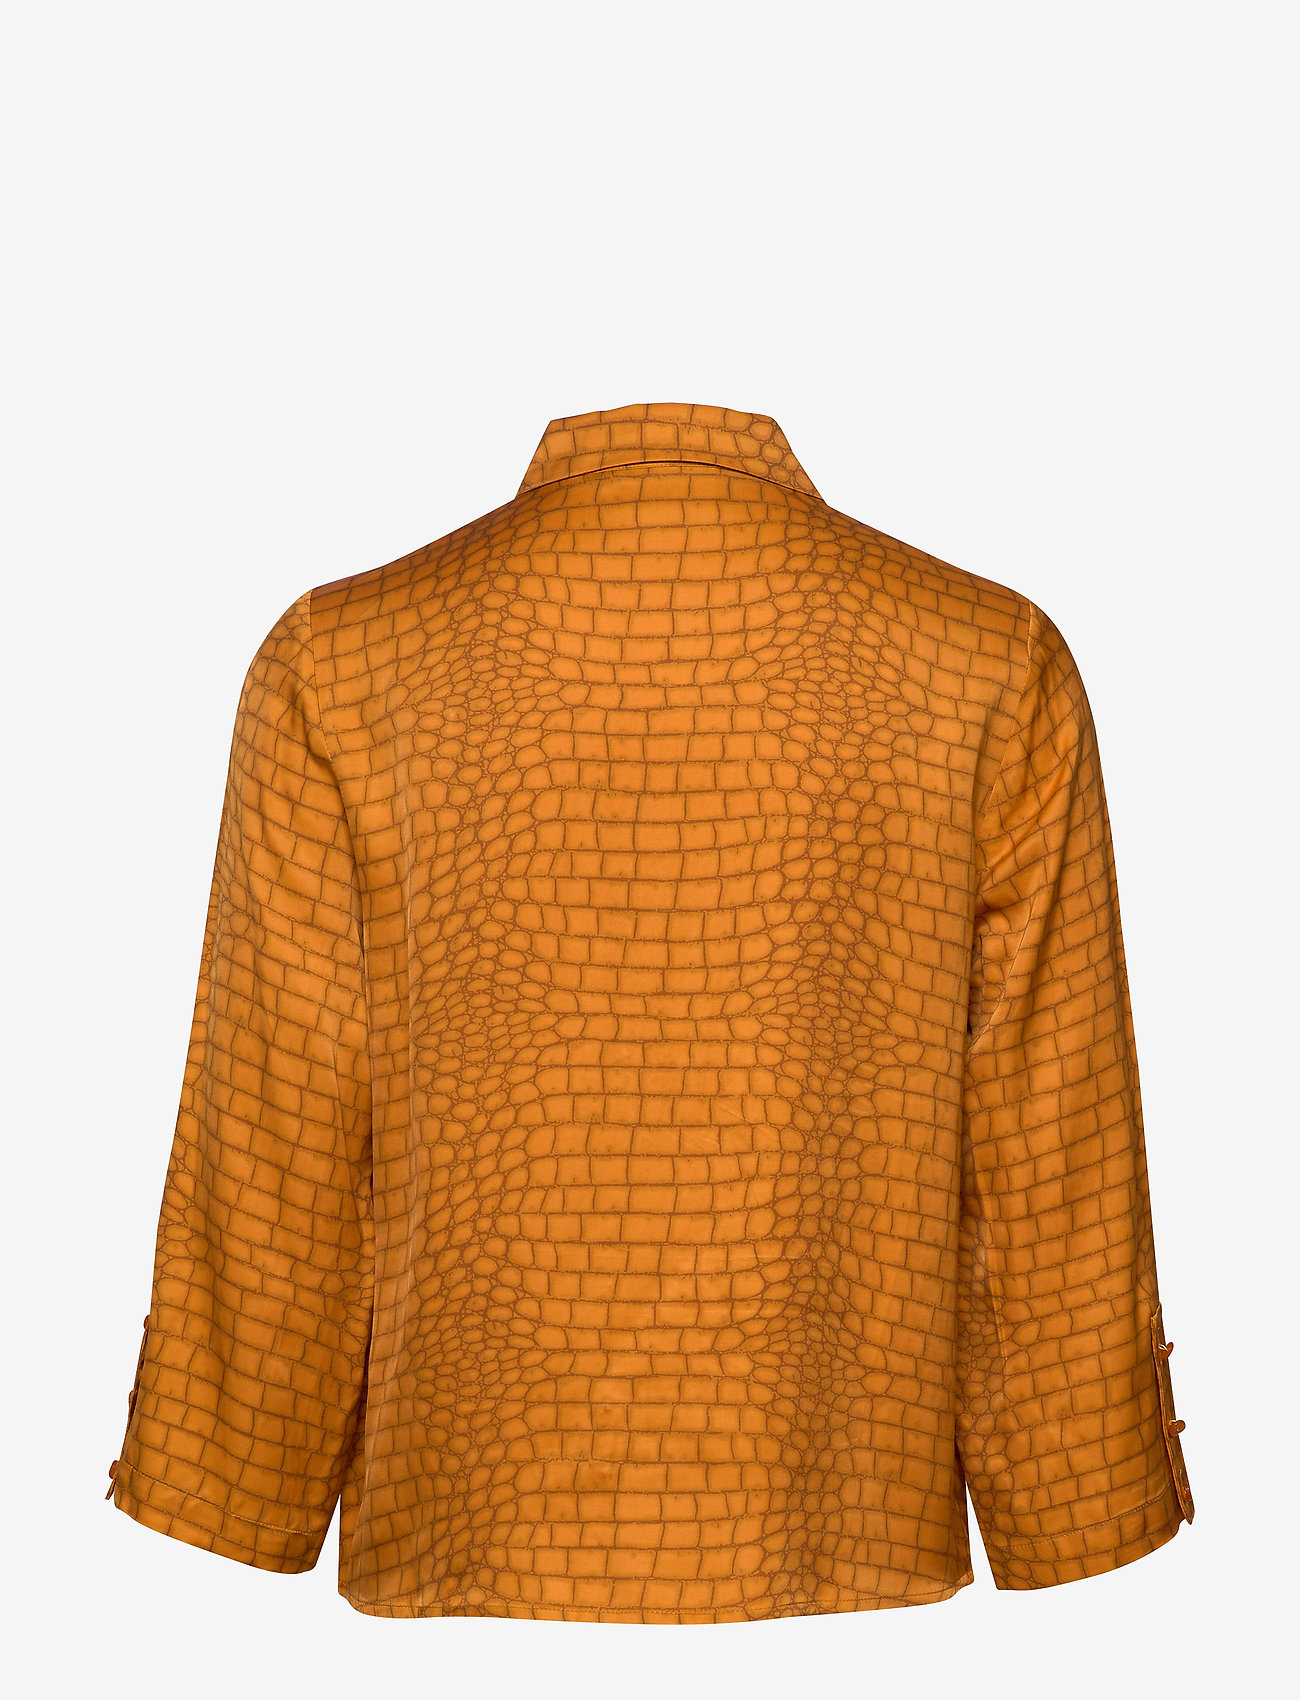 Gestuz - TabbyGZ shirt MS20 - pitkähihaiset puserot - golden oak - 1